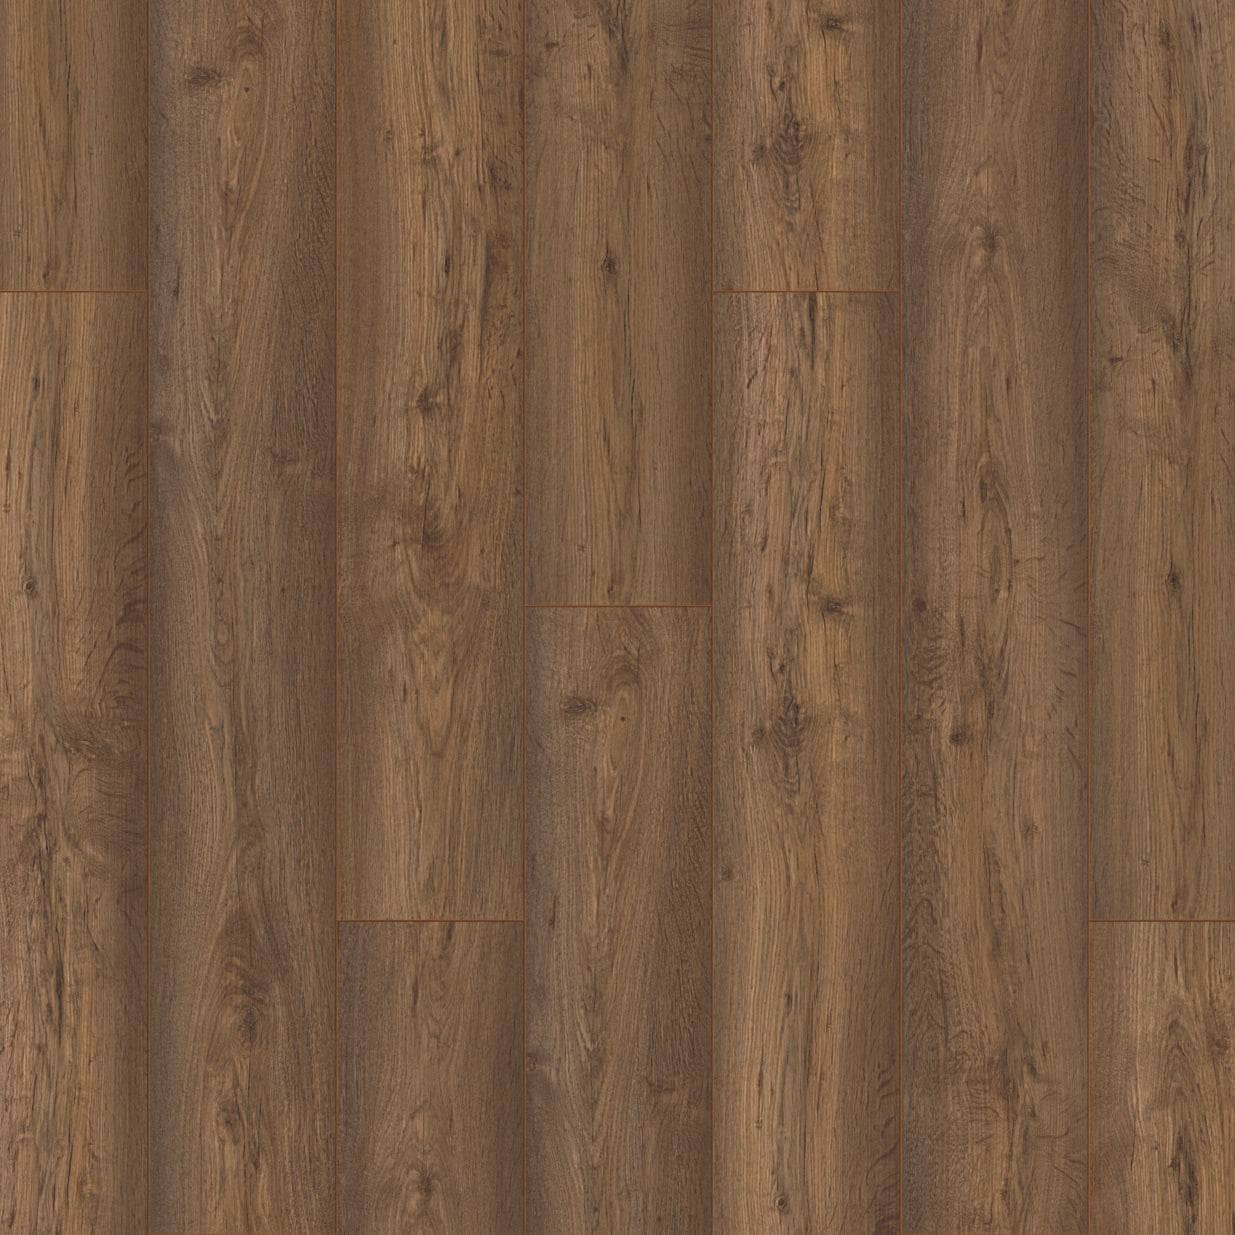 Flooring & Carpet  -  Krono Supernatural Modena Oak 8mm Laminate Flooring (2.22m² Pack)  -  60003734